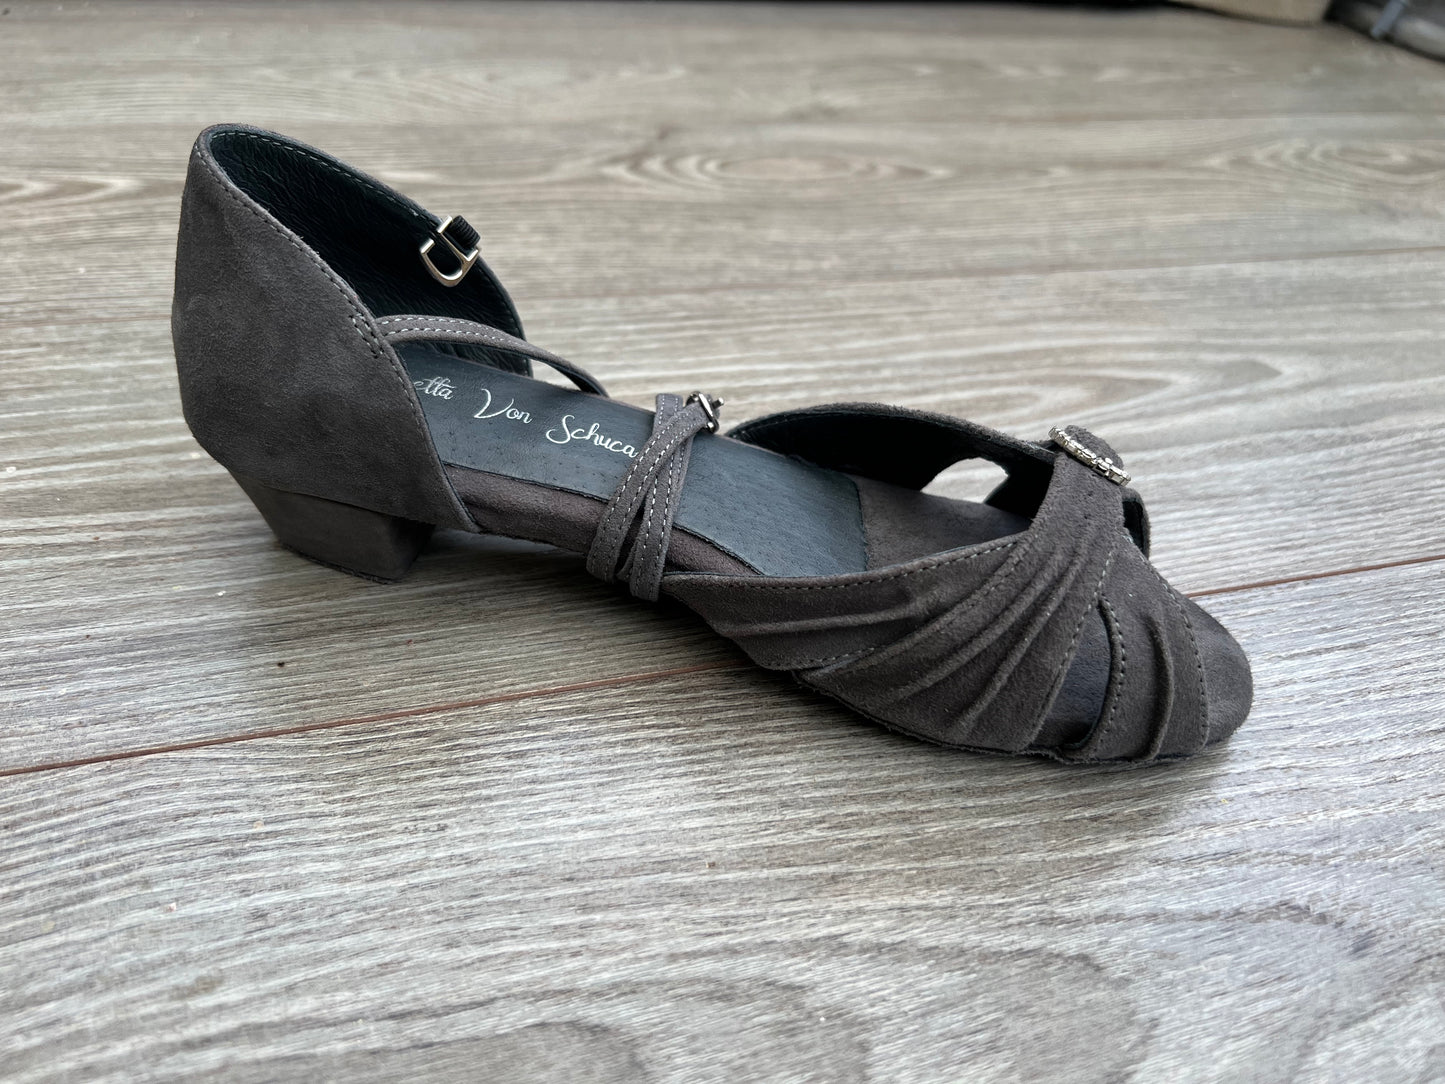 Coca Dance Sandal Grey Suede- The most adjustable sandal yet!